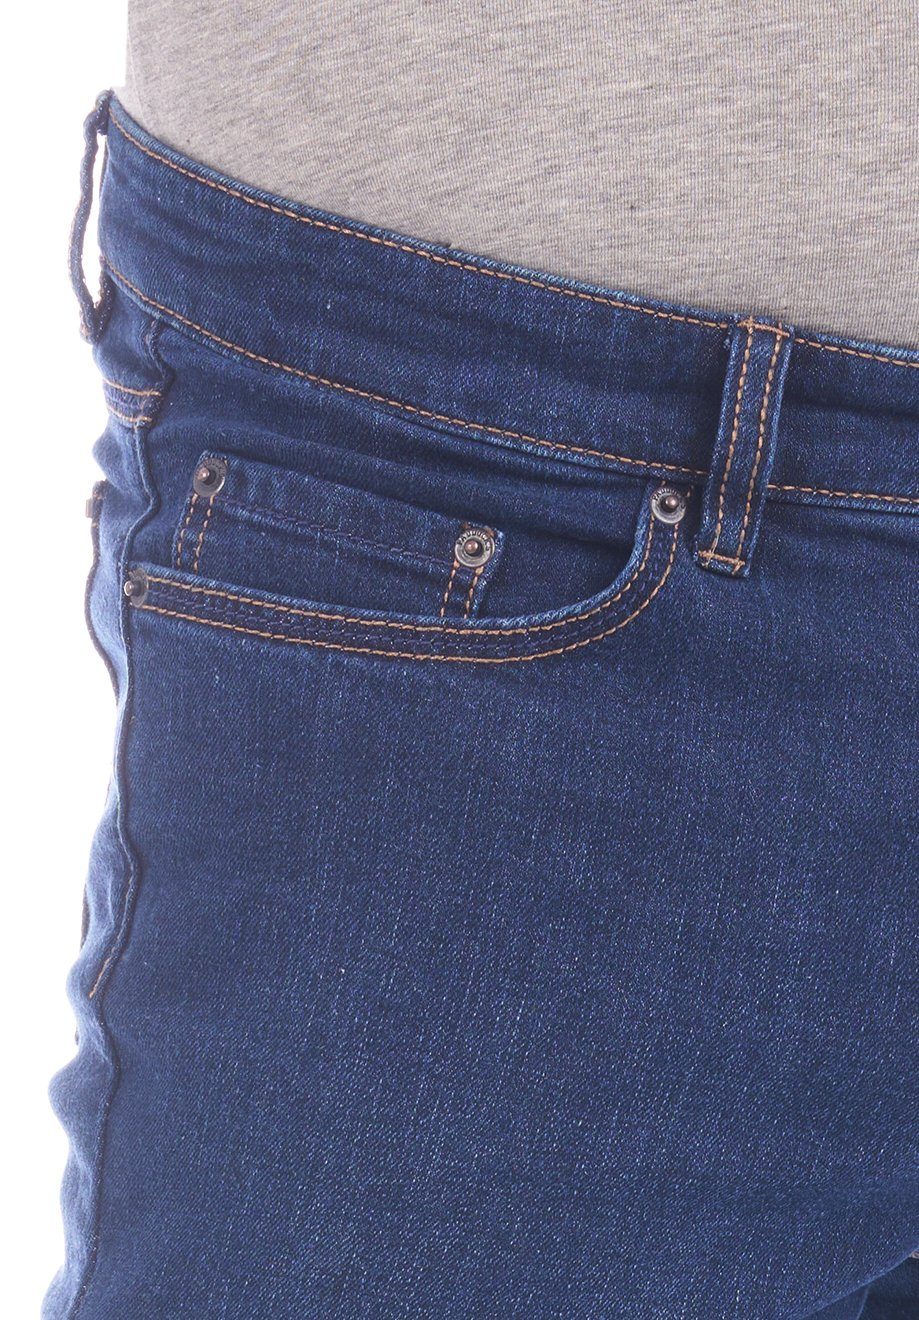 Hose Slim-fit-Jeans Night Pipe Stone Herren mit Fit (4318) Paddock's Stretch Ranger Denim Slim Jeanshose